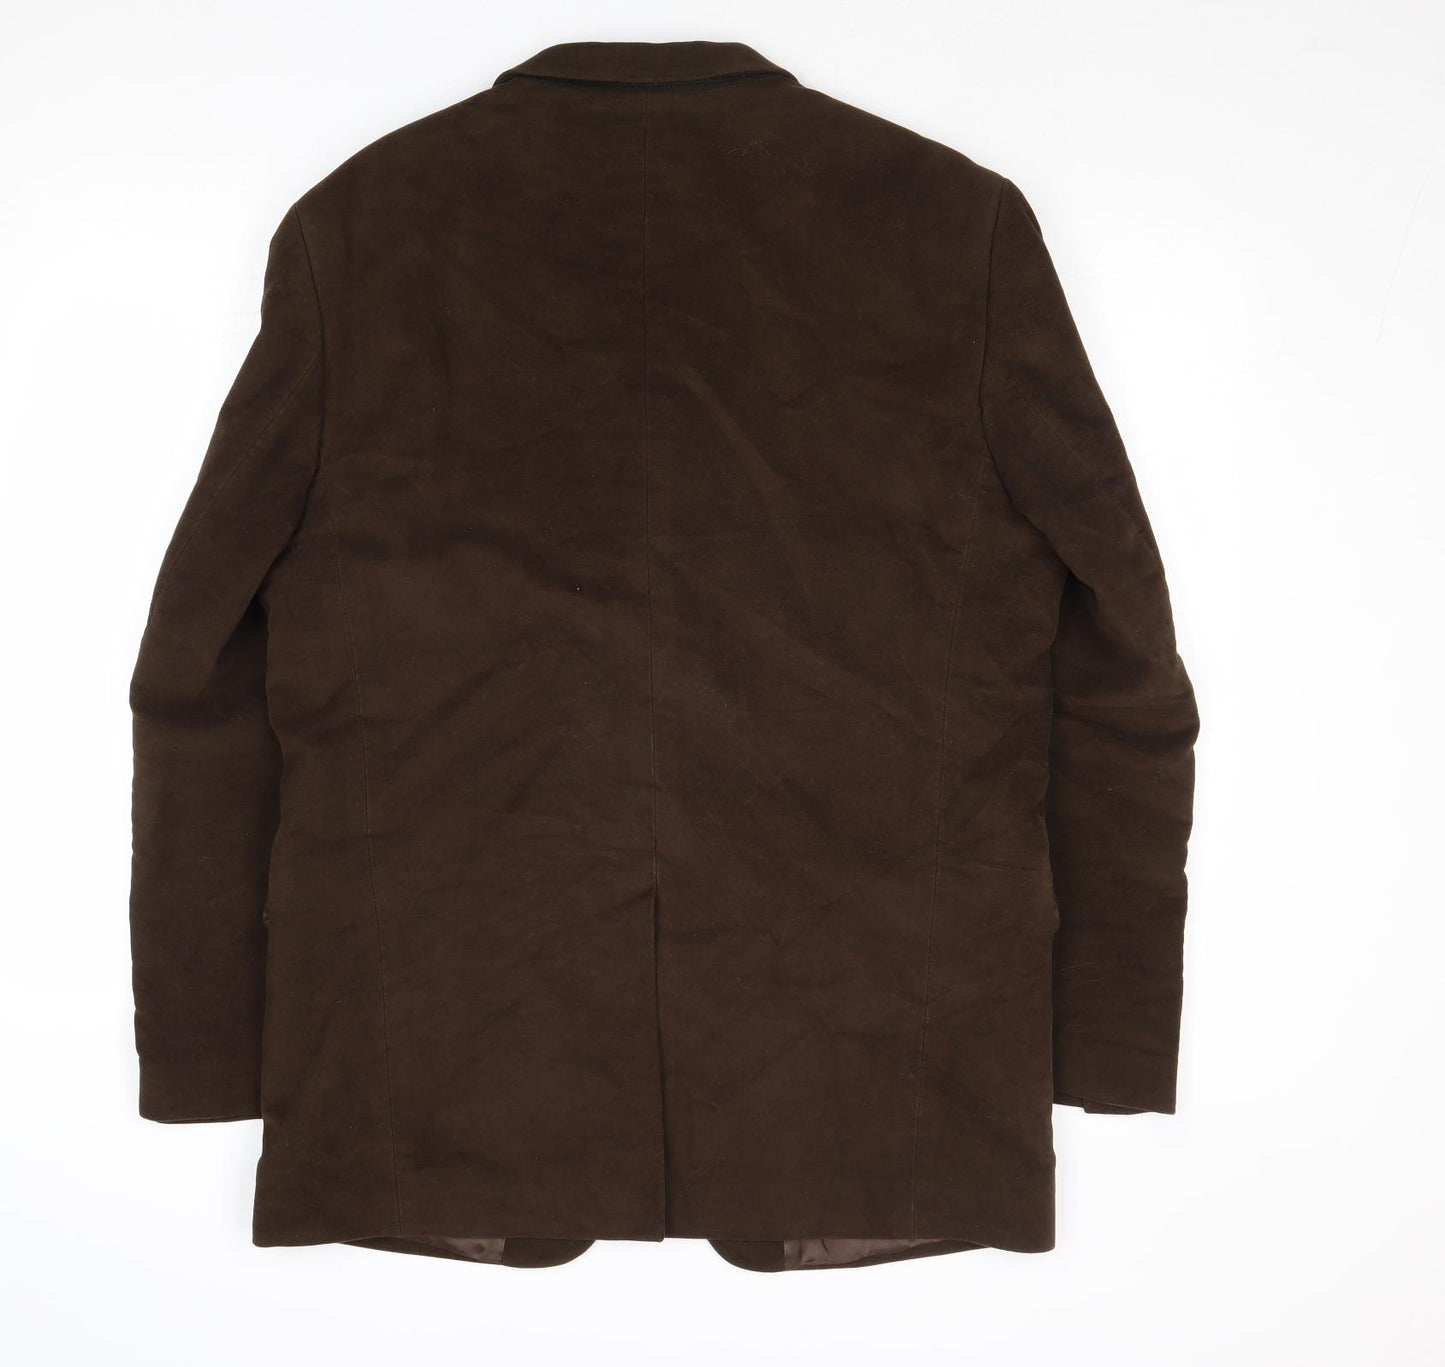 Racing Green Mens Brown Cotton Jacket Suit Jacket Size 40 Regular